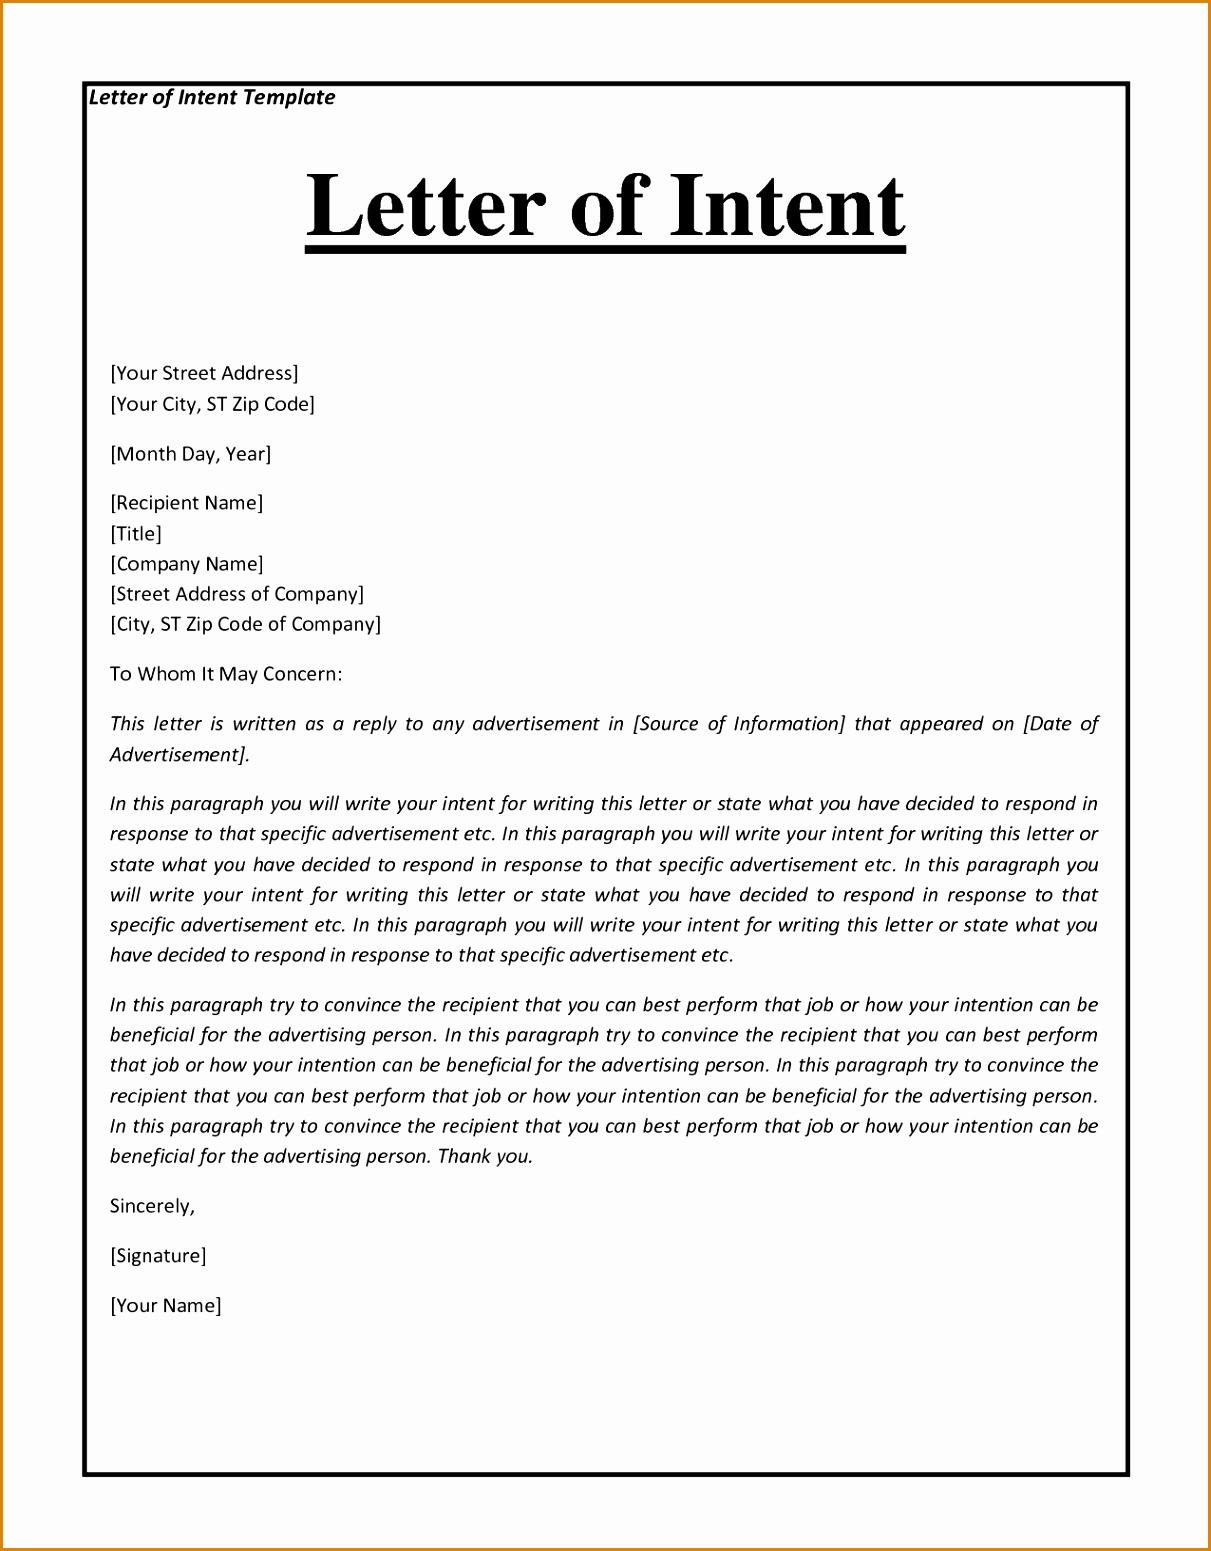 Homeschool Letter Of Intent Template Samples | Letter ...